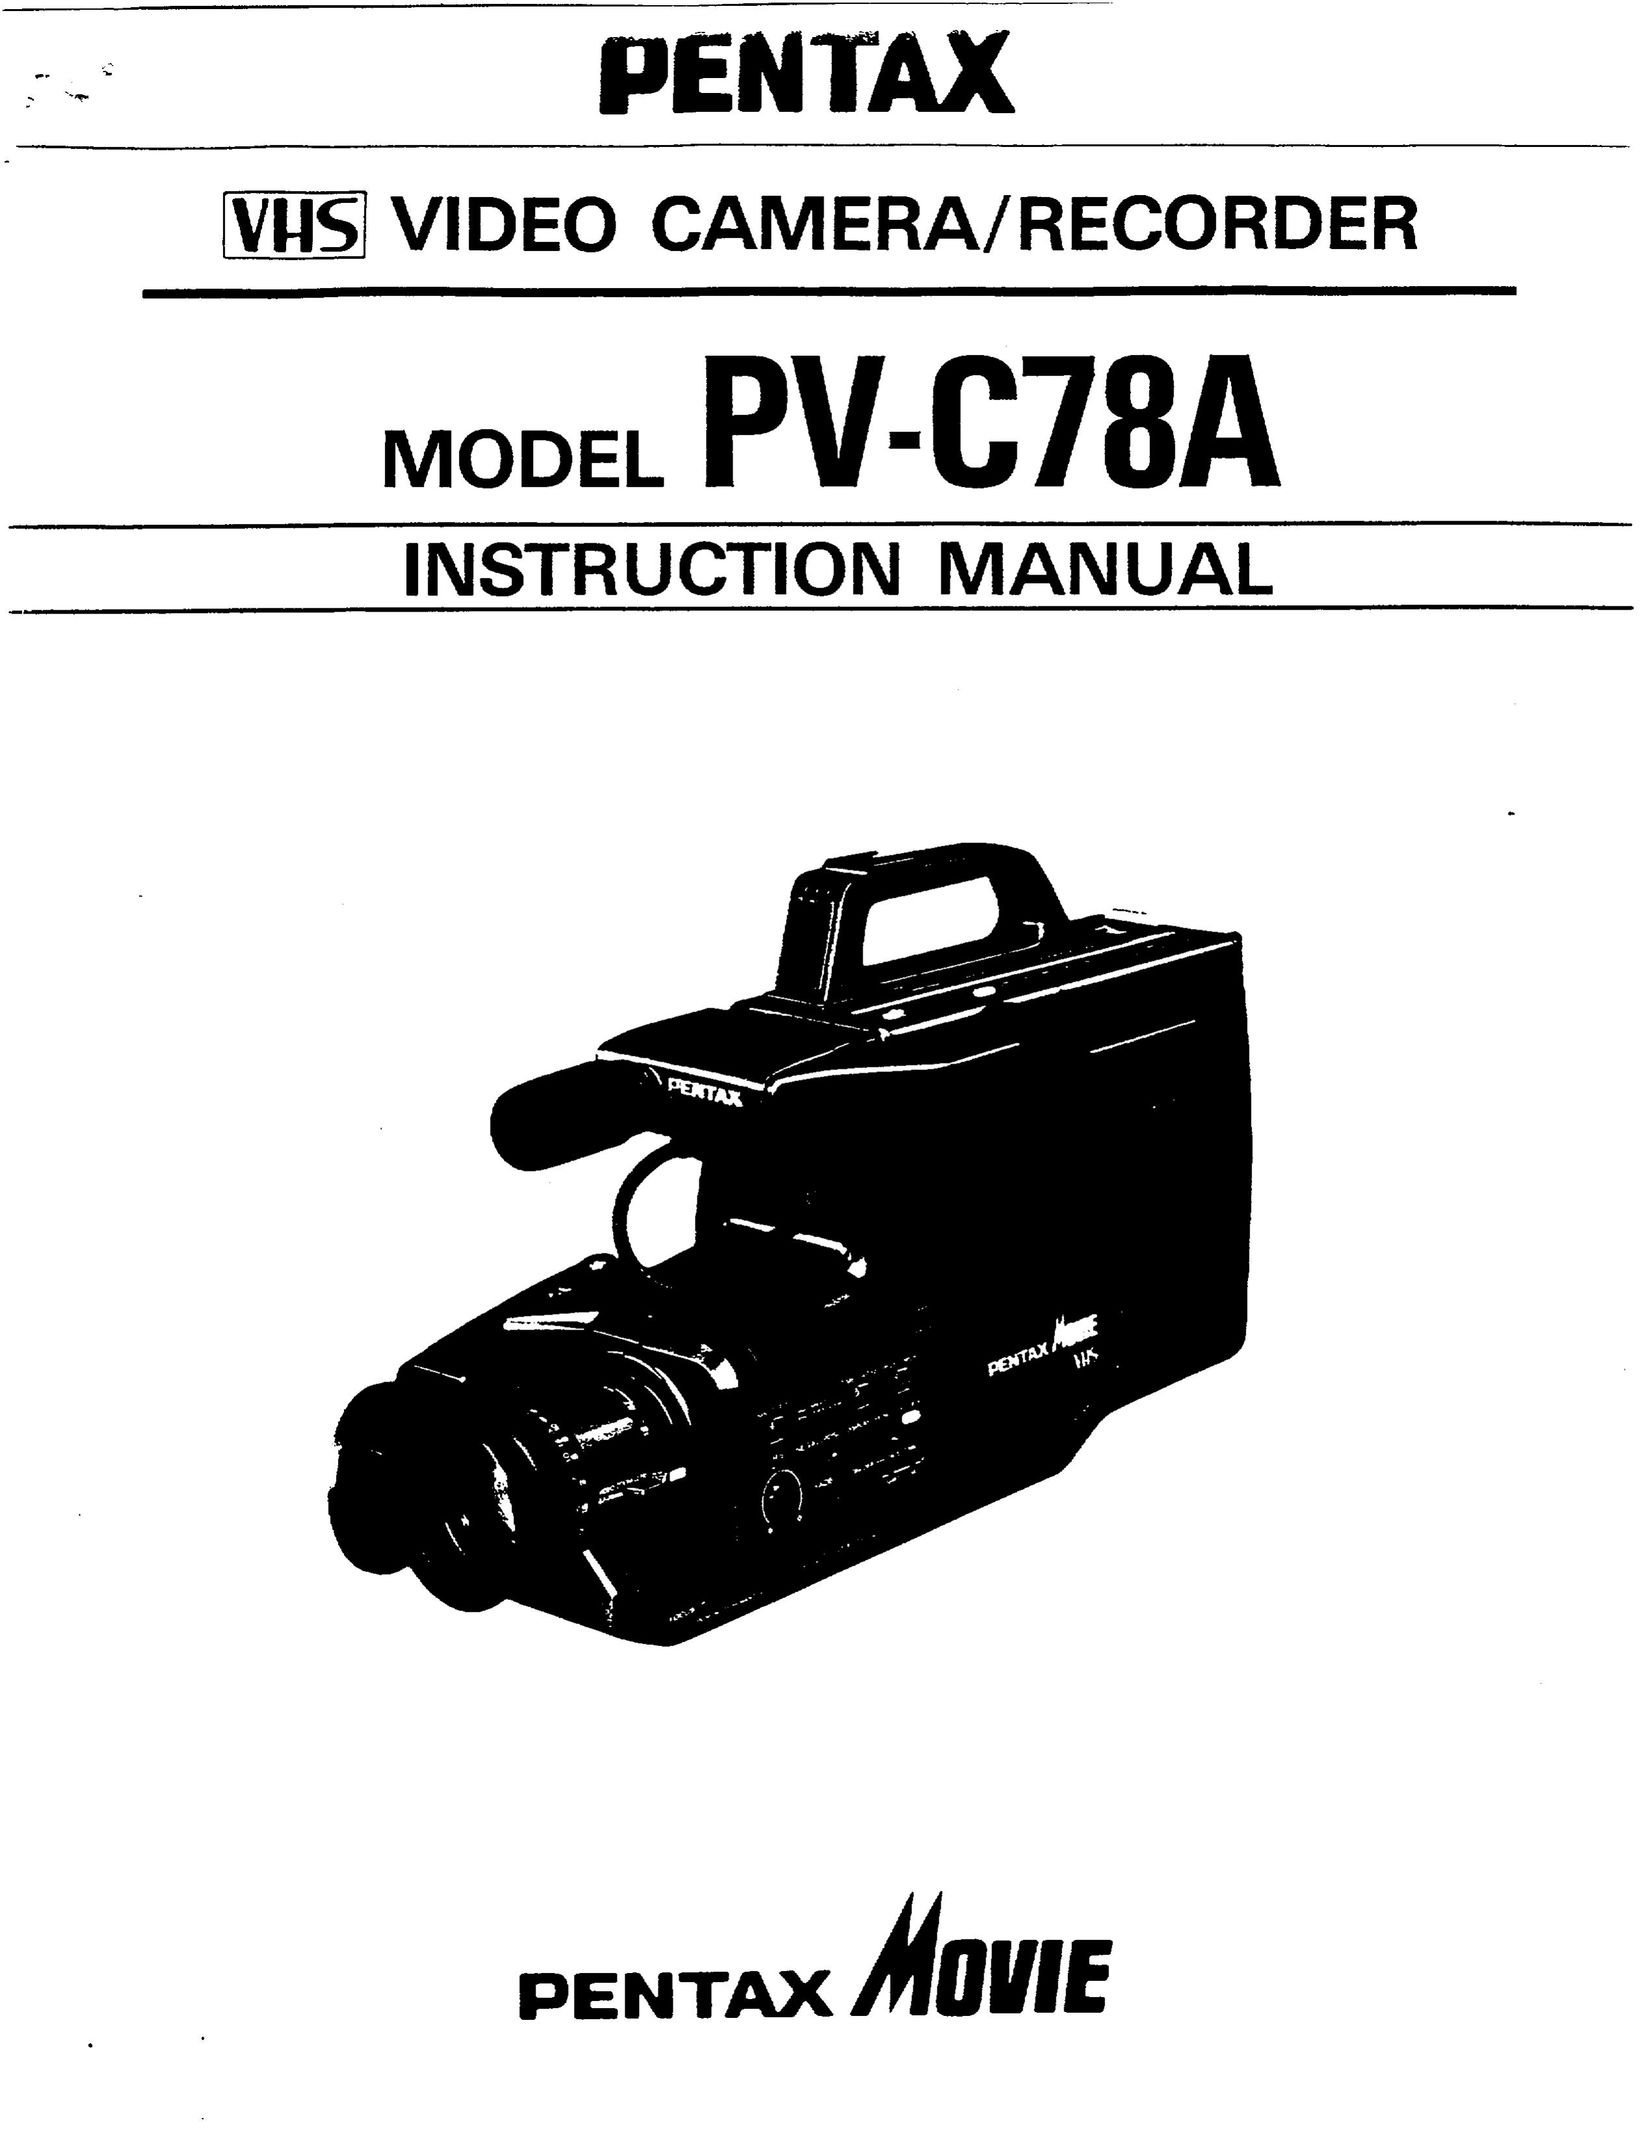 Pentax PV-C78A VCR User Manual